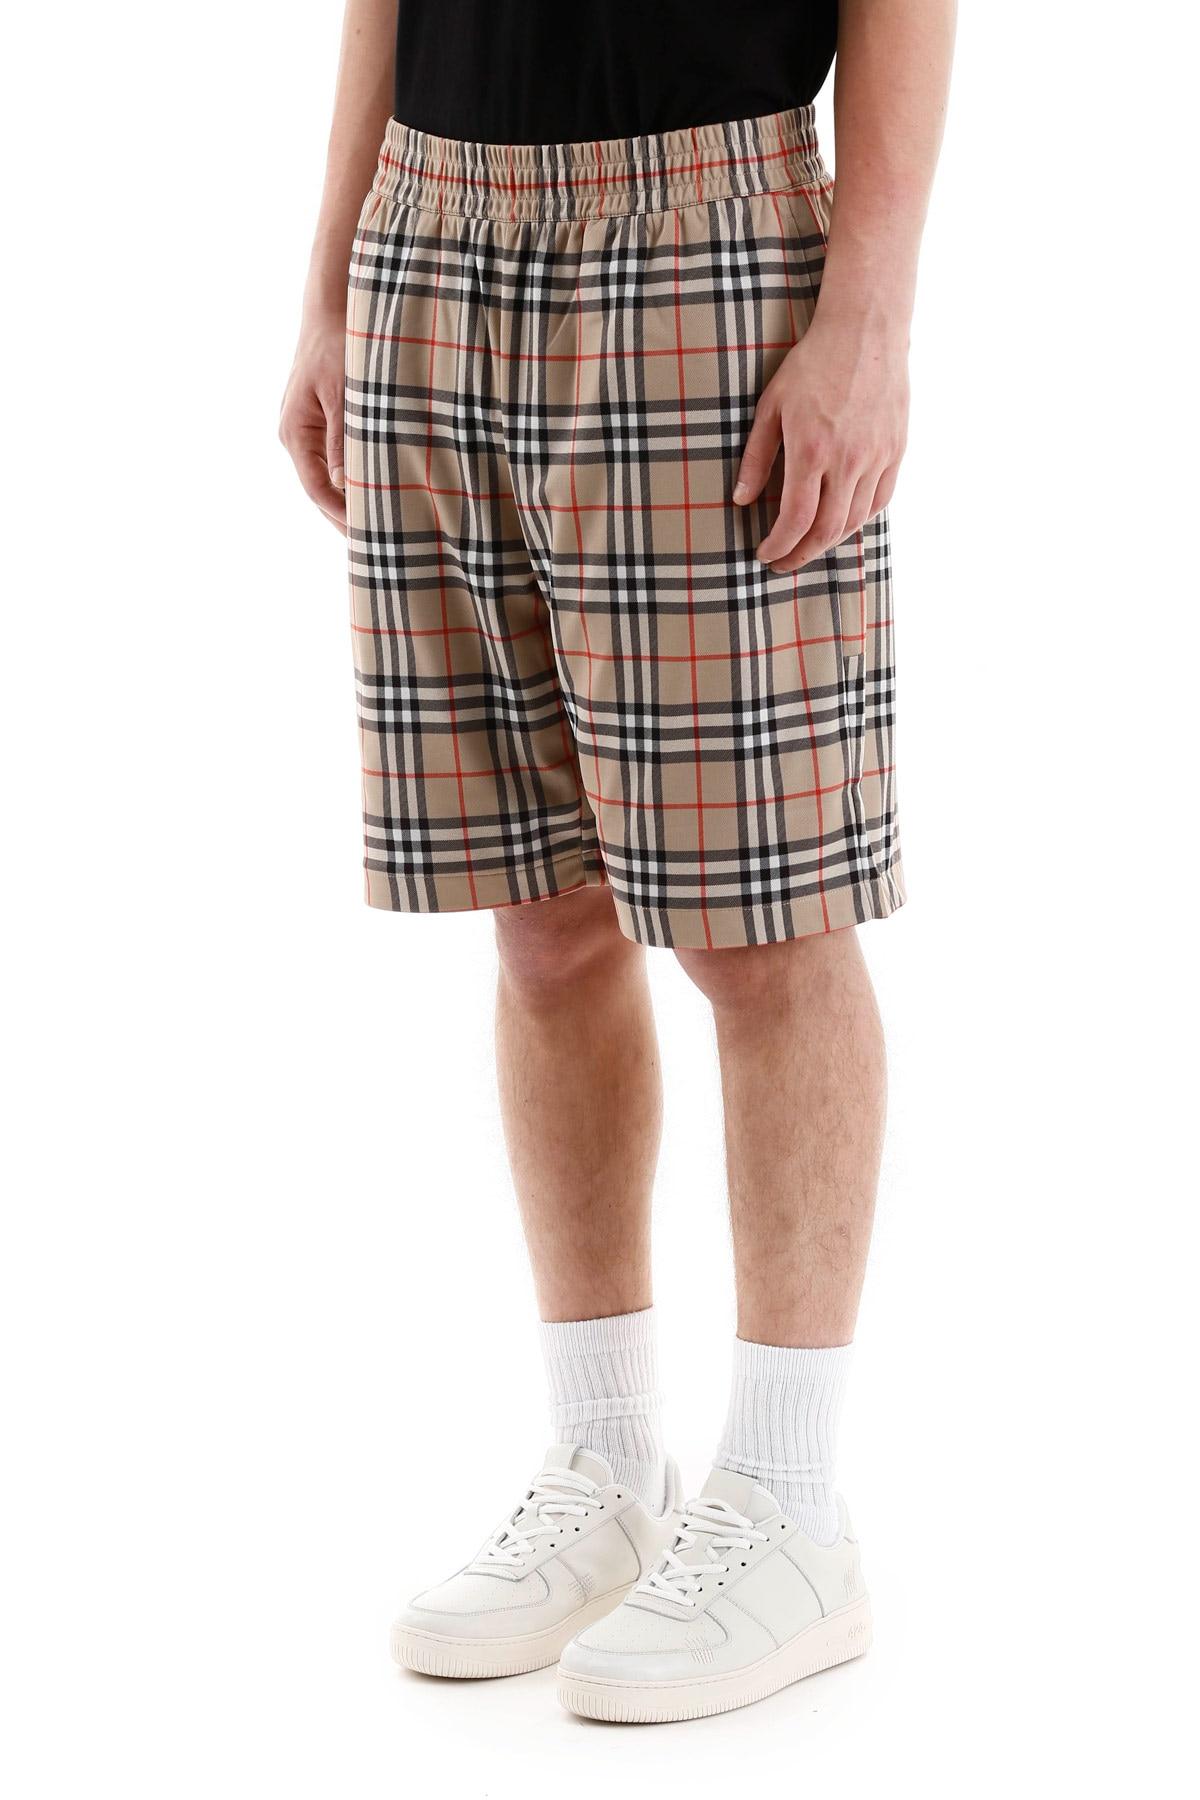 Burberry Vintage Check Bermuda Shorts for Men | Lyst